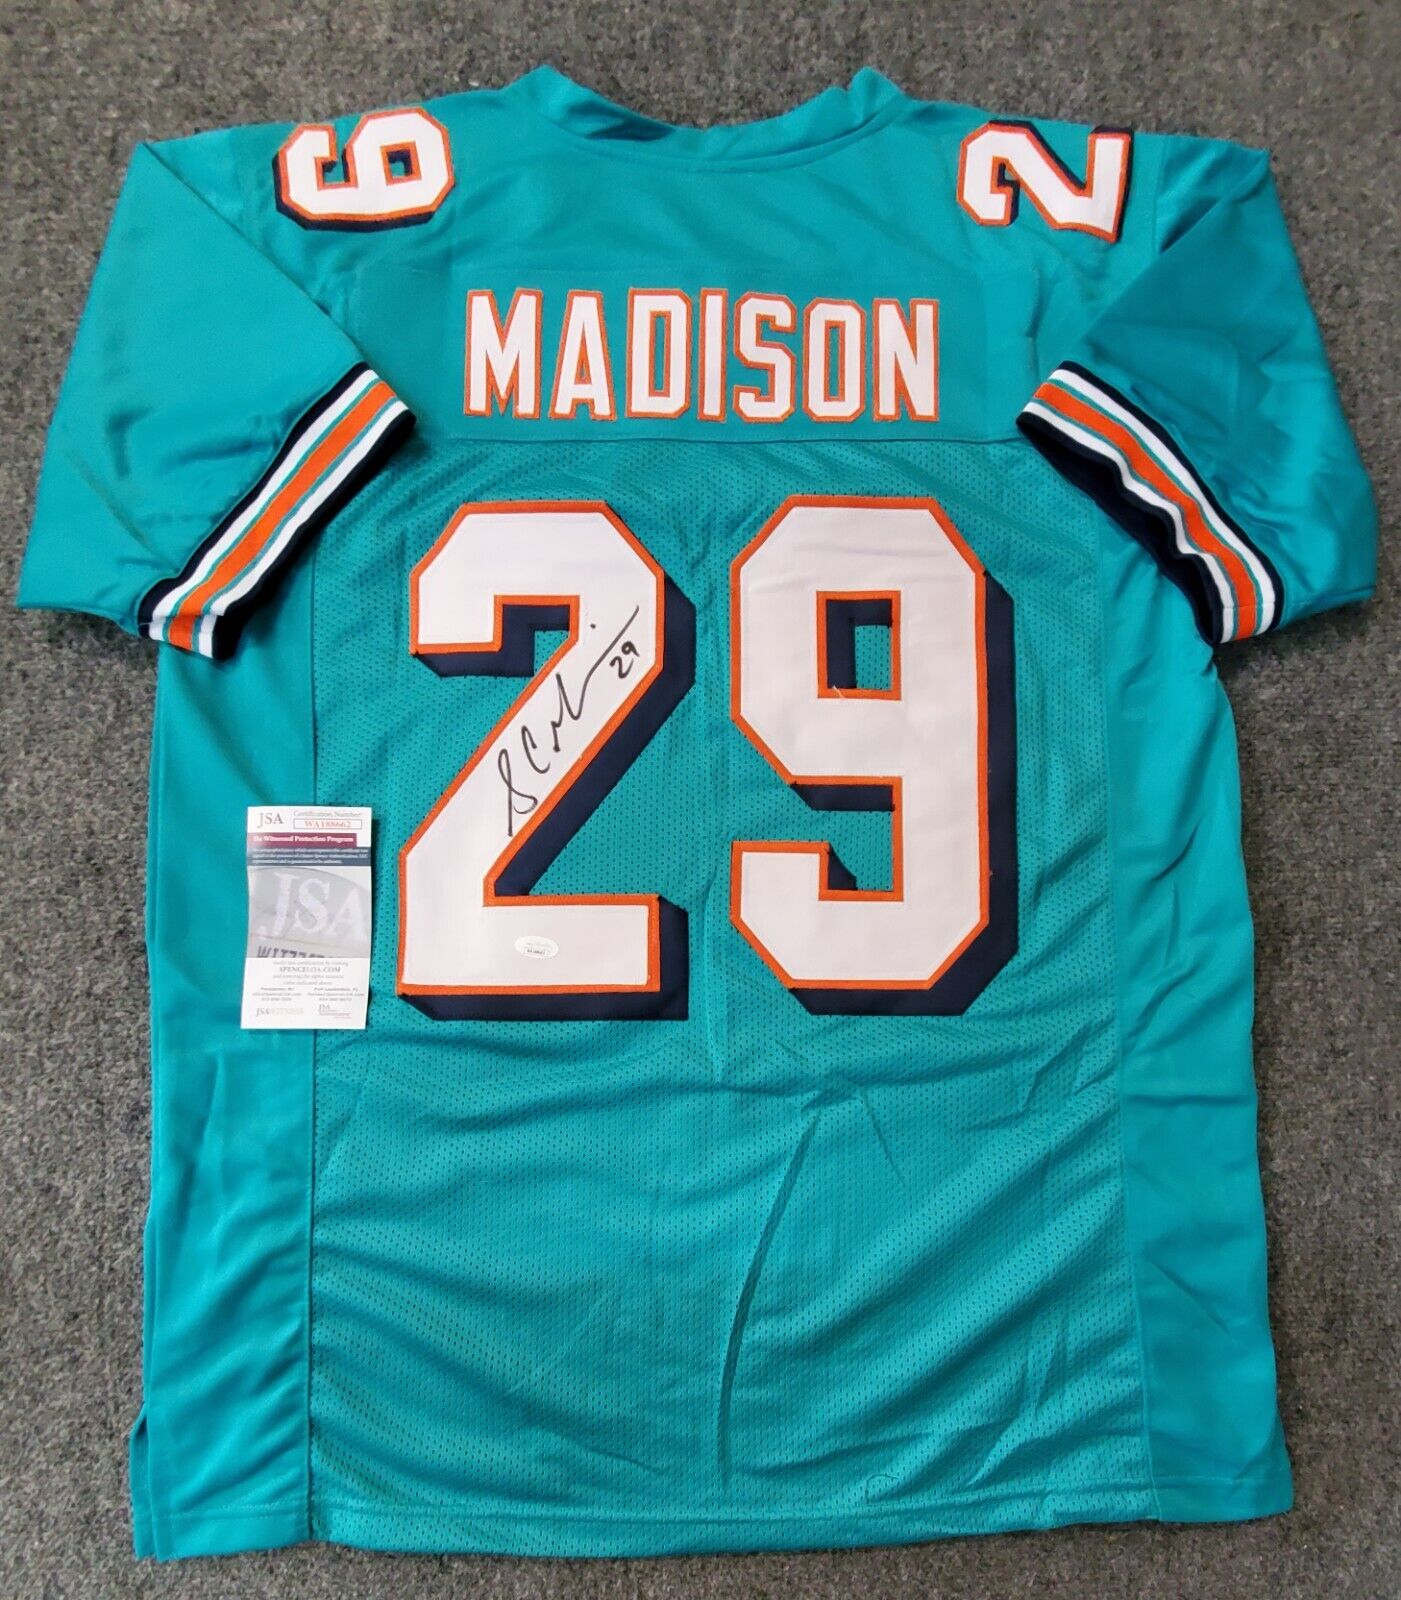 MVP Authentics Miami Dolphins Sam Madison Autographed Signed Jersey Jsa Coa 94.50 sports jersey framing , jersey framing